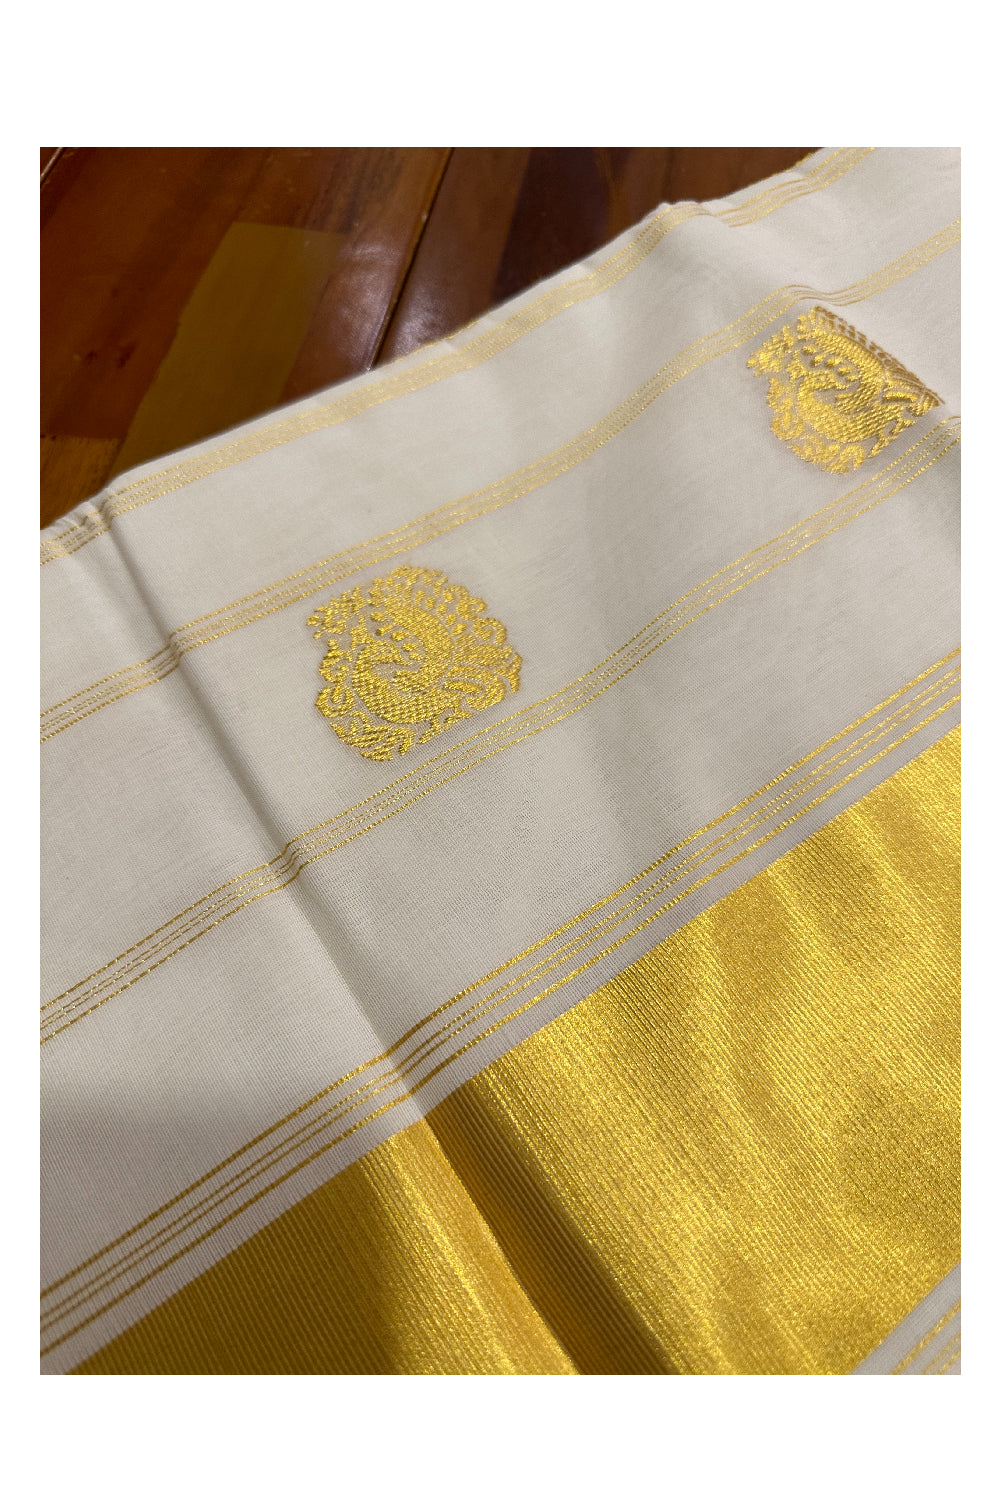 Southloom Premium Handloom Cotton Saree with Kasavu Peacock Woven Motifs